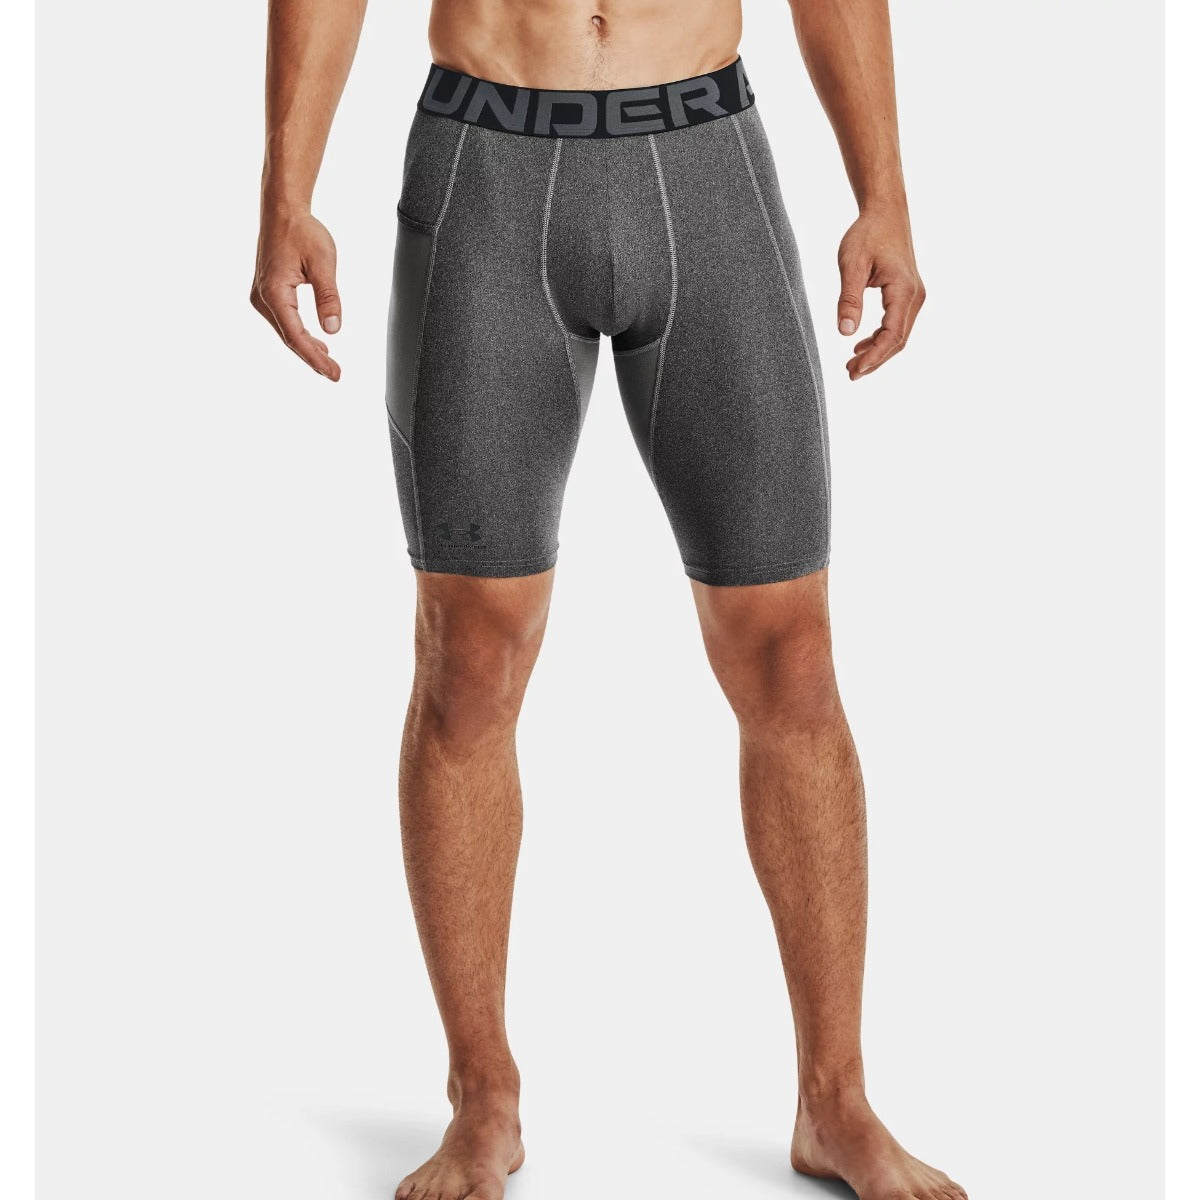 Under Armour Heatgear Pocket Long Shorts Men's (Grey)